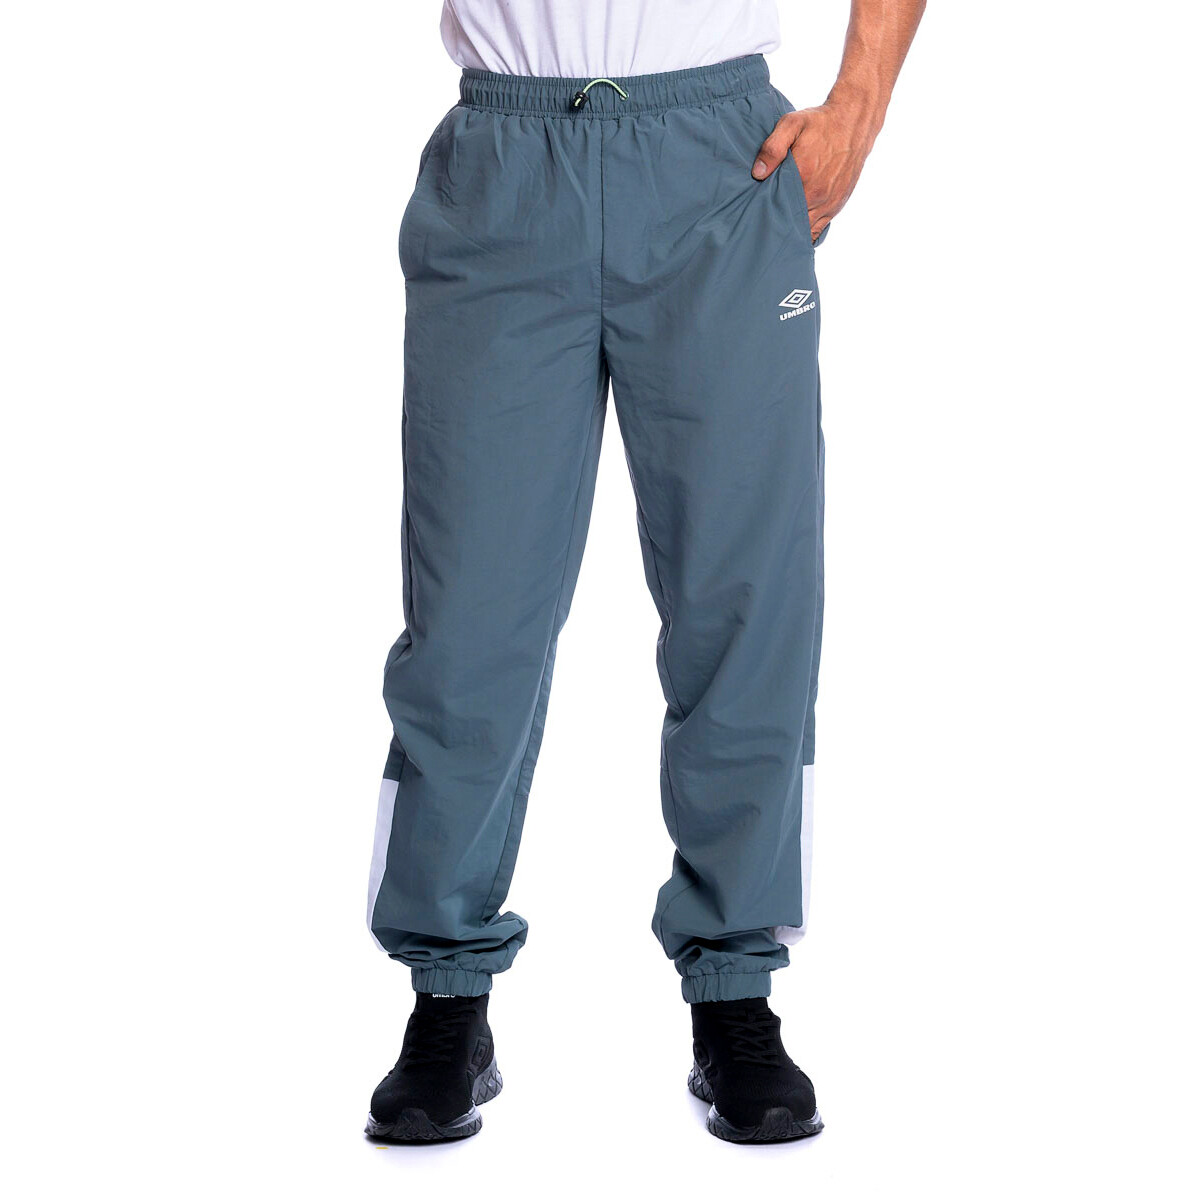 Pantalón Panelled Umbro Hombre - Kxy 